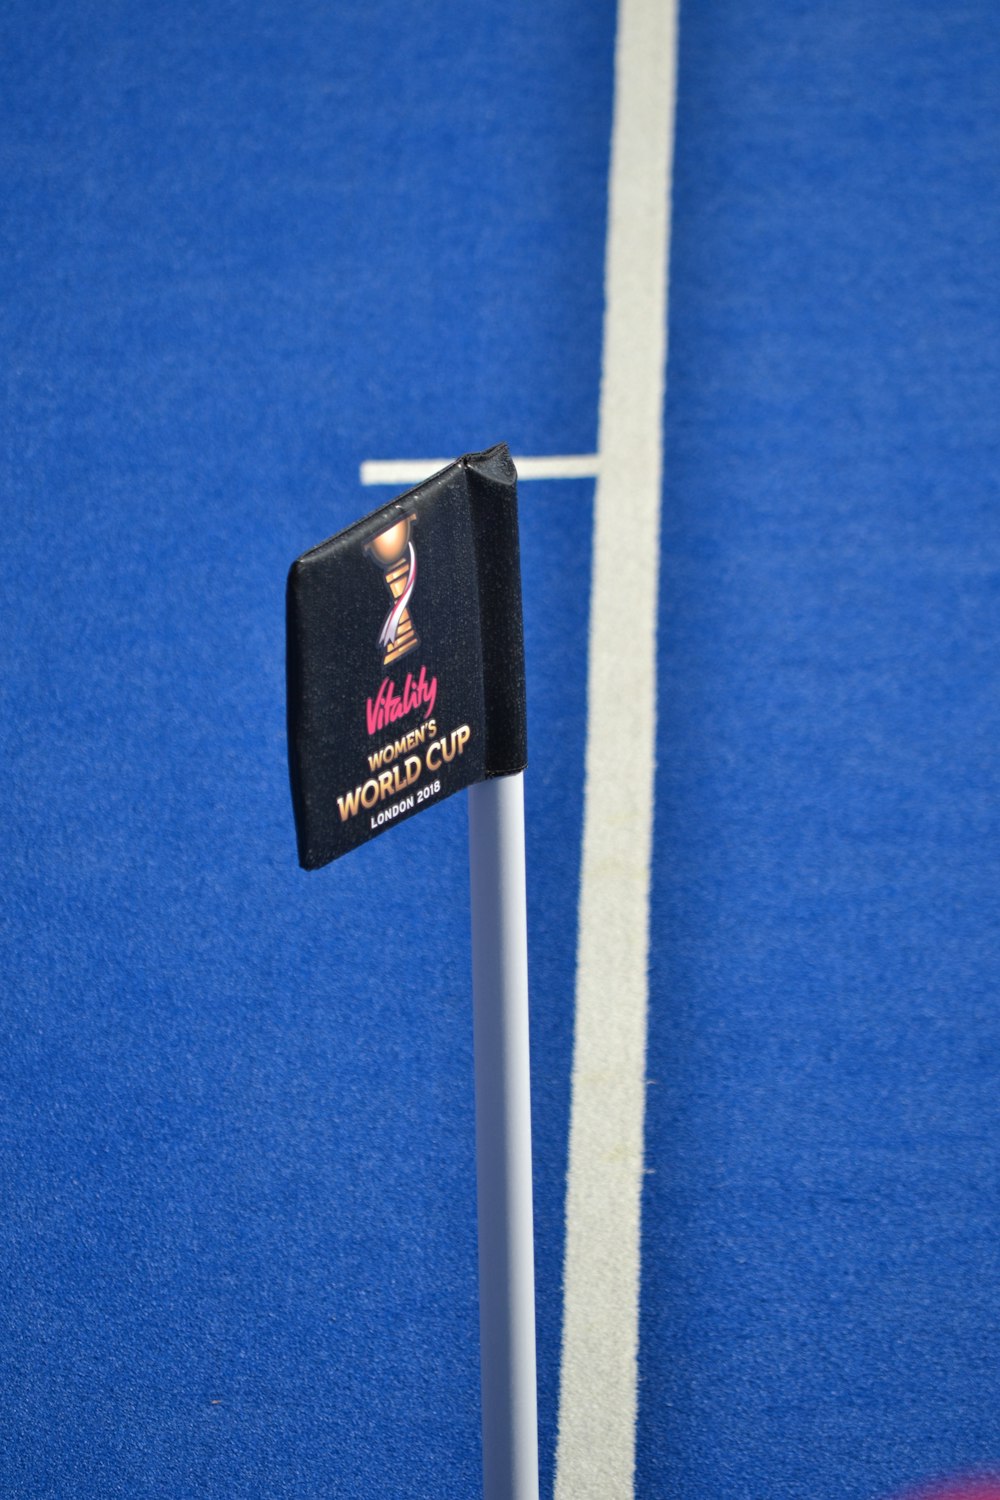 a sign on a pole on a blue court